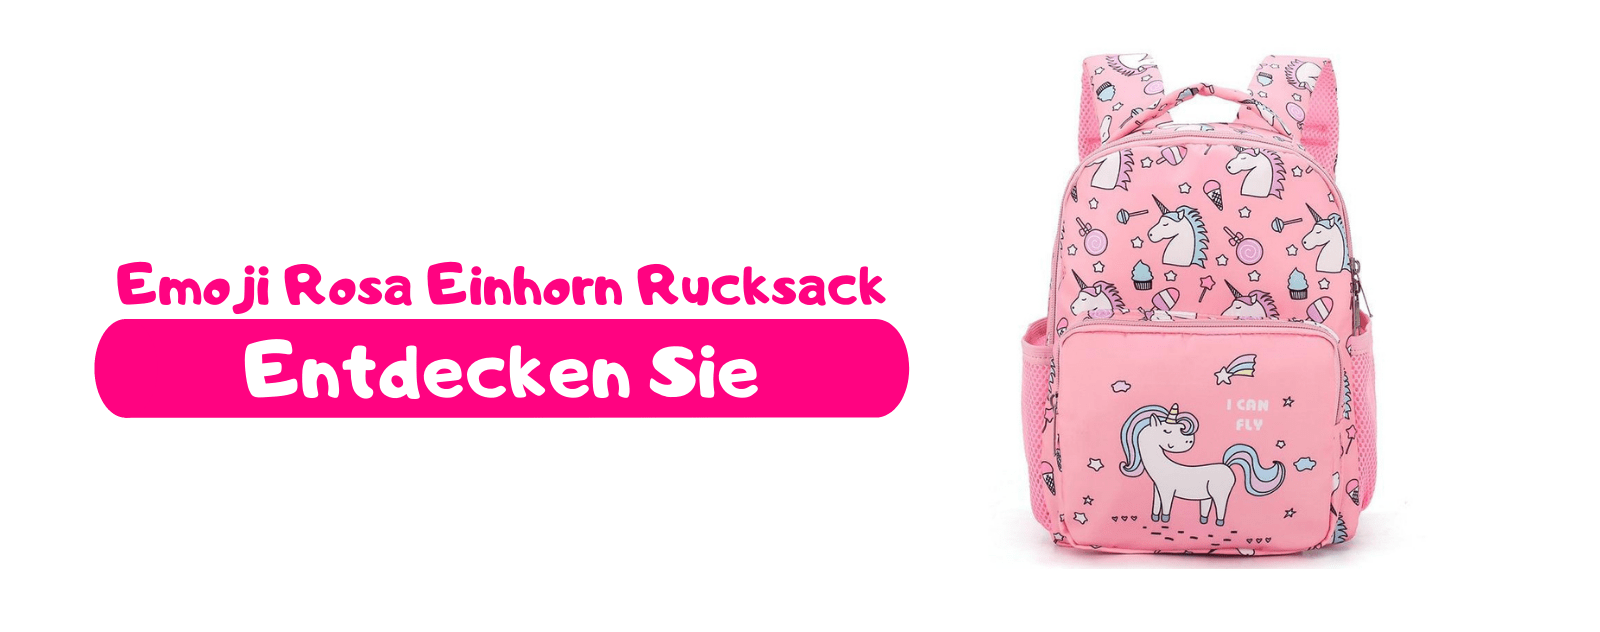 Emoji Rosa Einhorn Rucksack